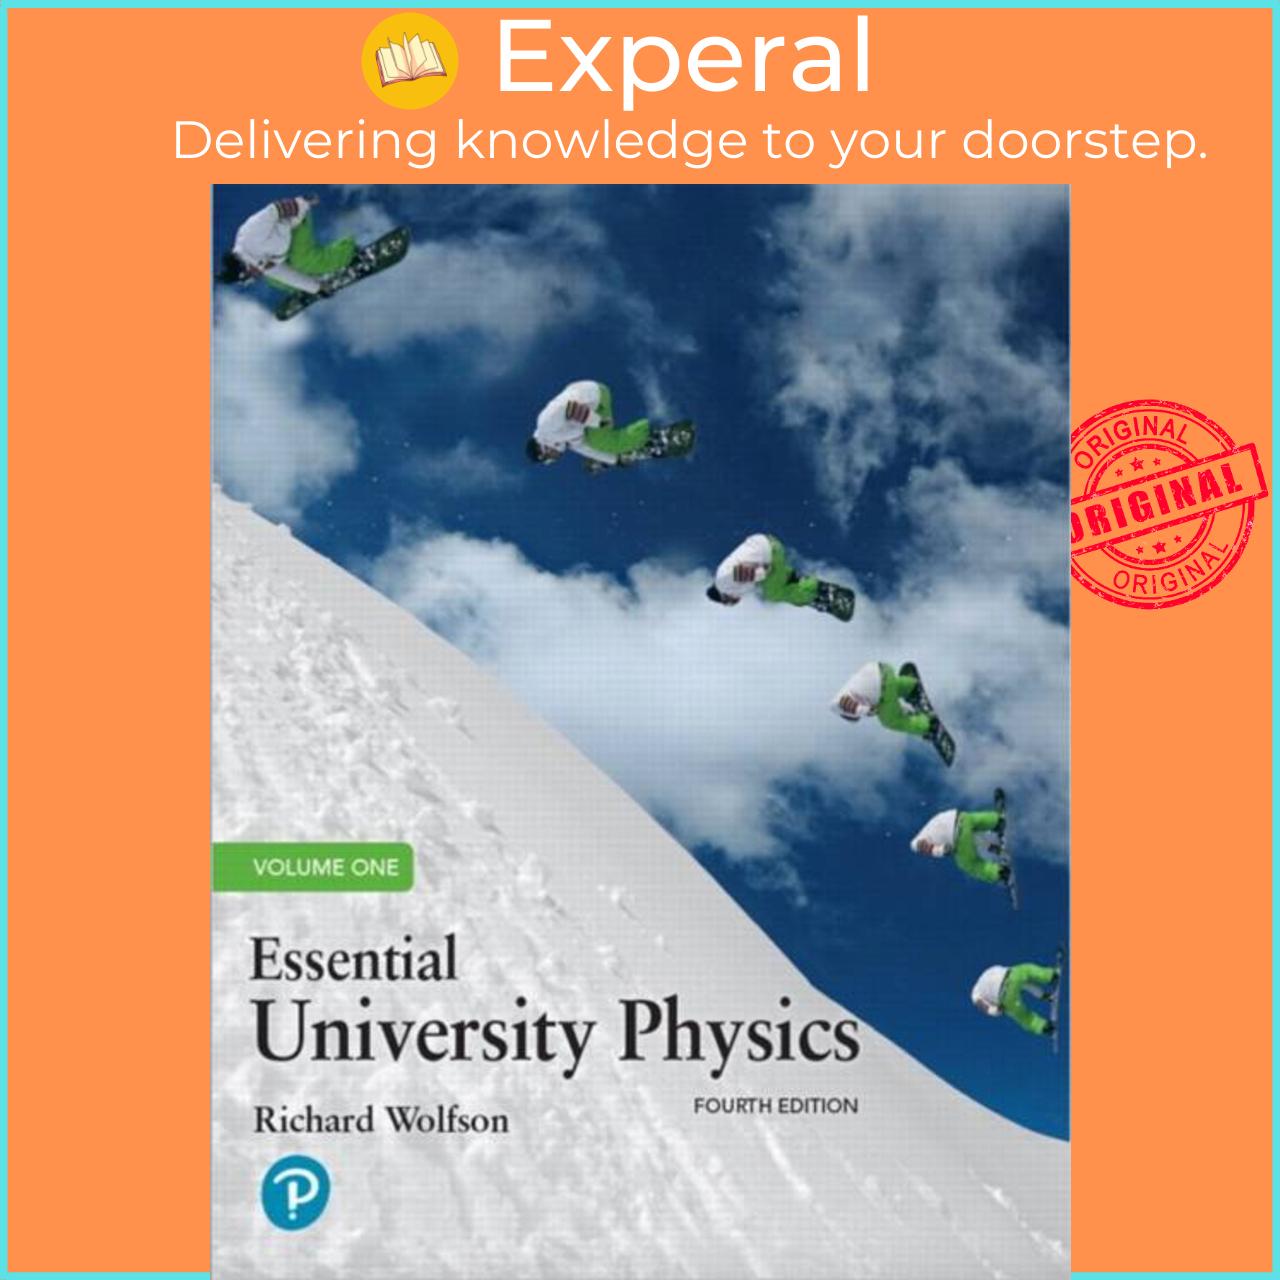 Sách - Essential University Physics, Volume 1 by Richard Wolfson (UK edition, paperback)